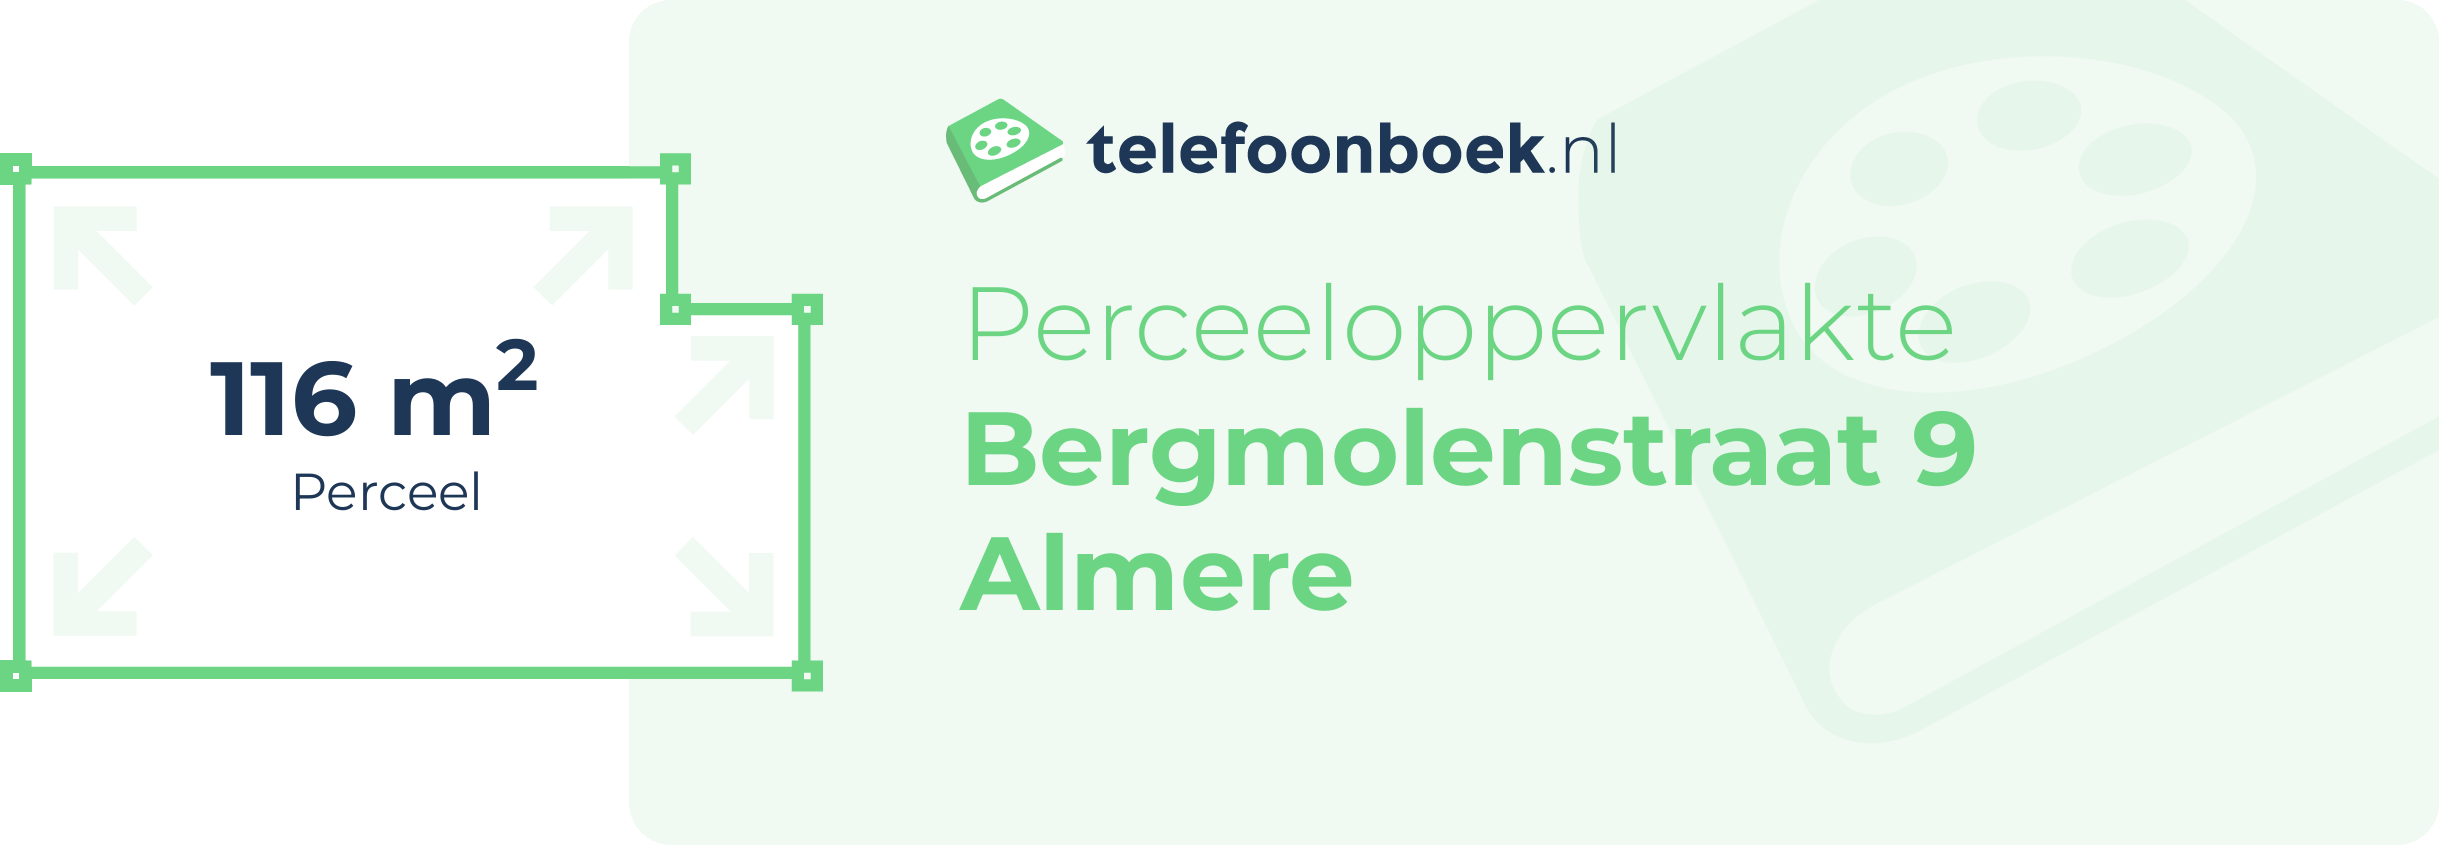 Perceeloppervlakte Bergmolenstraat 9 Almere